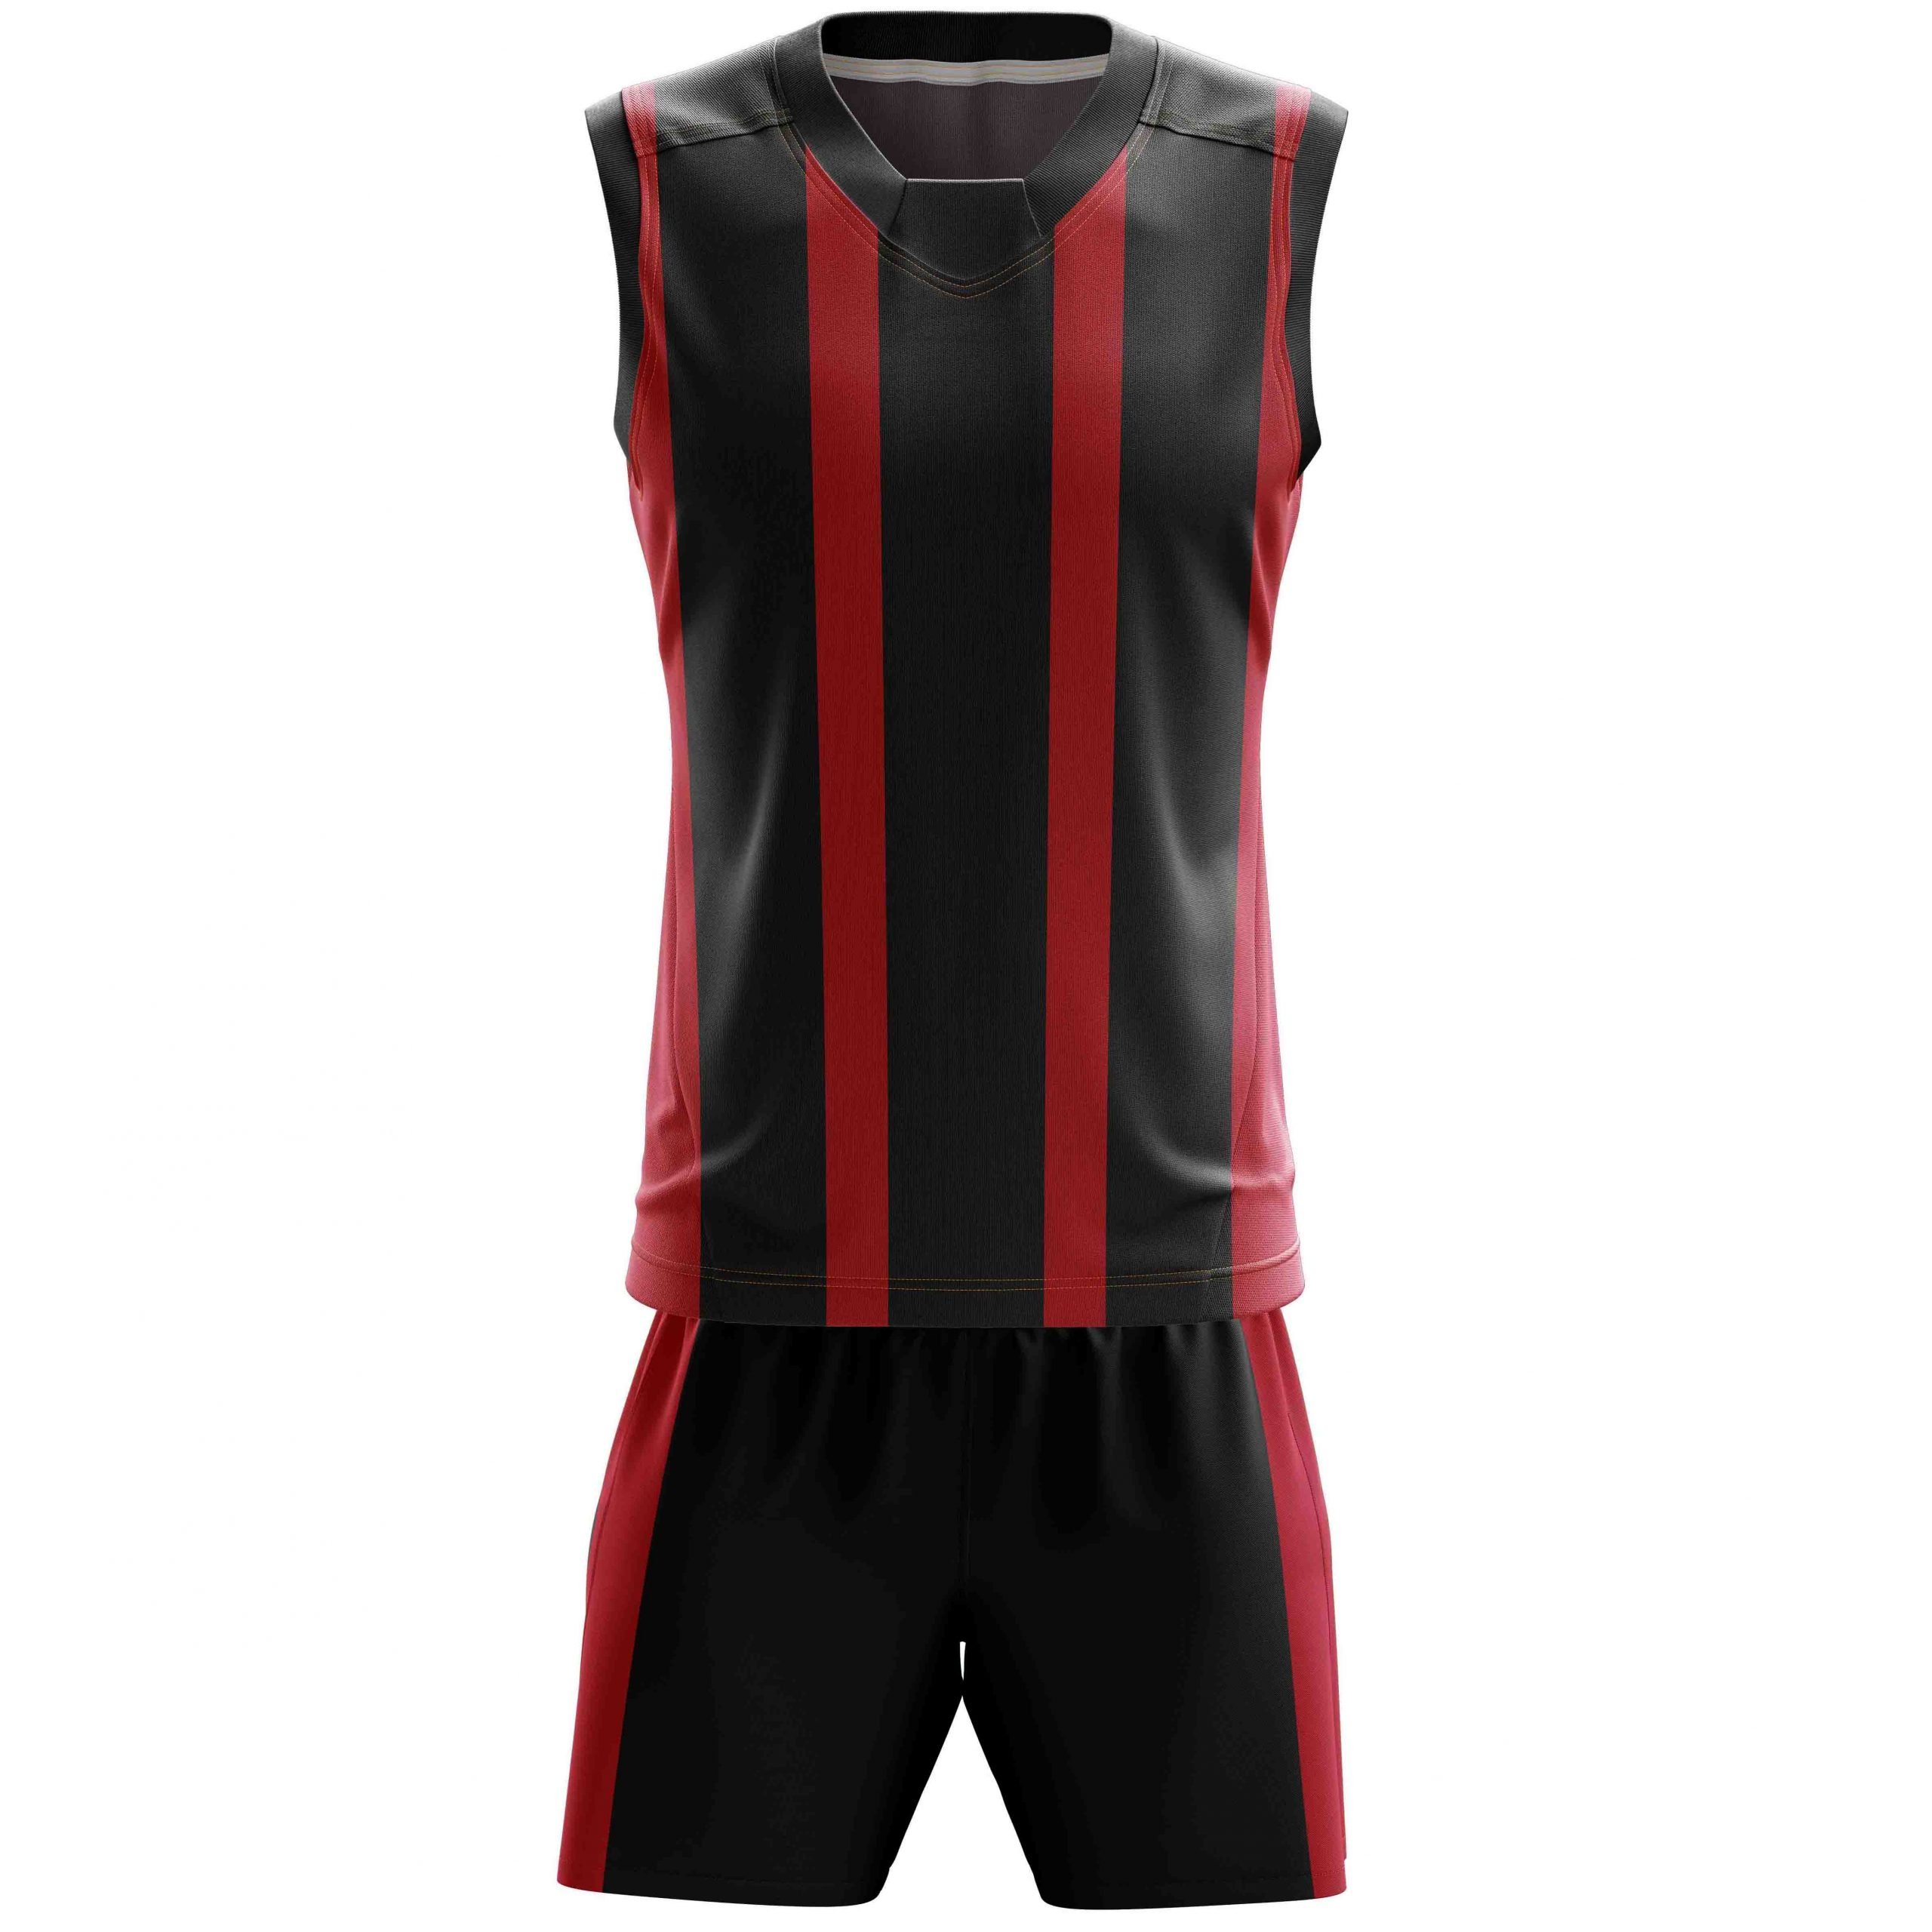 Custom Red Basketball Jerseys, Basketball Uniforms For Your Team